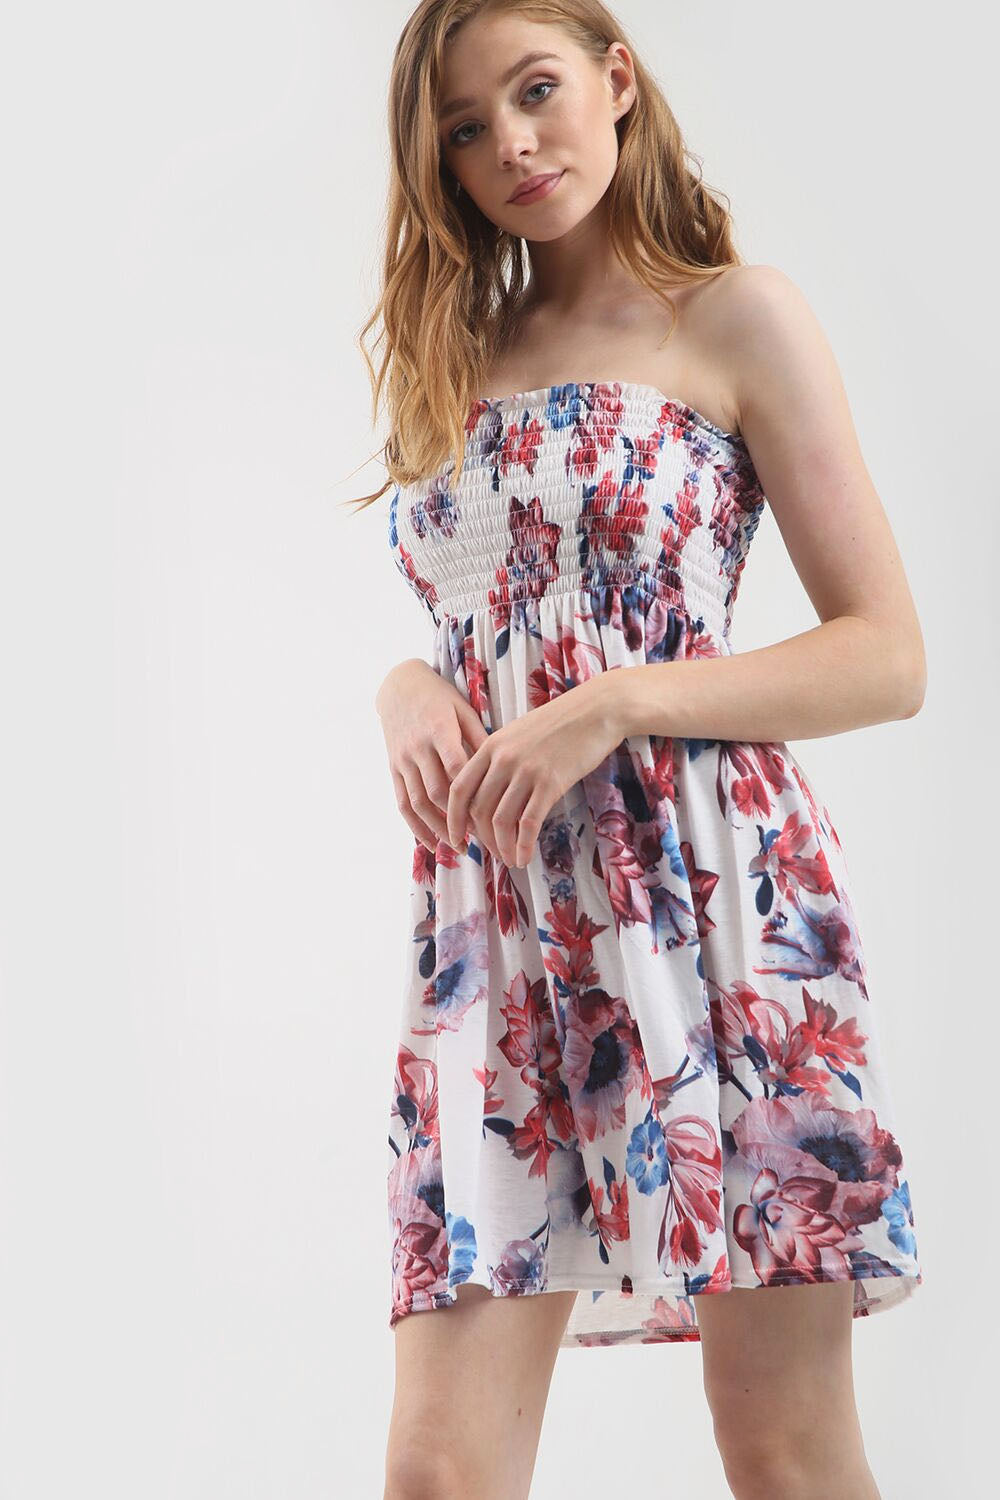 Sammi Sheering Strapless Floral Swing Dress - bejealous-com